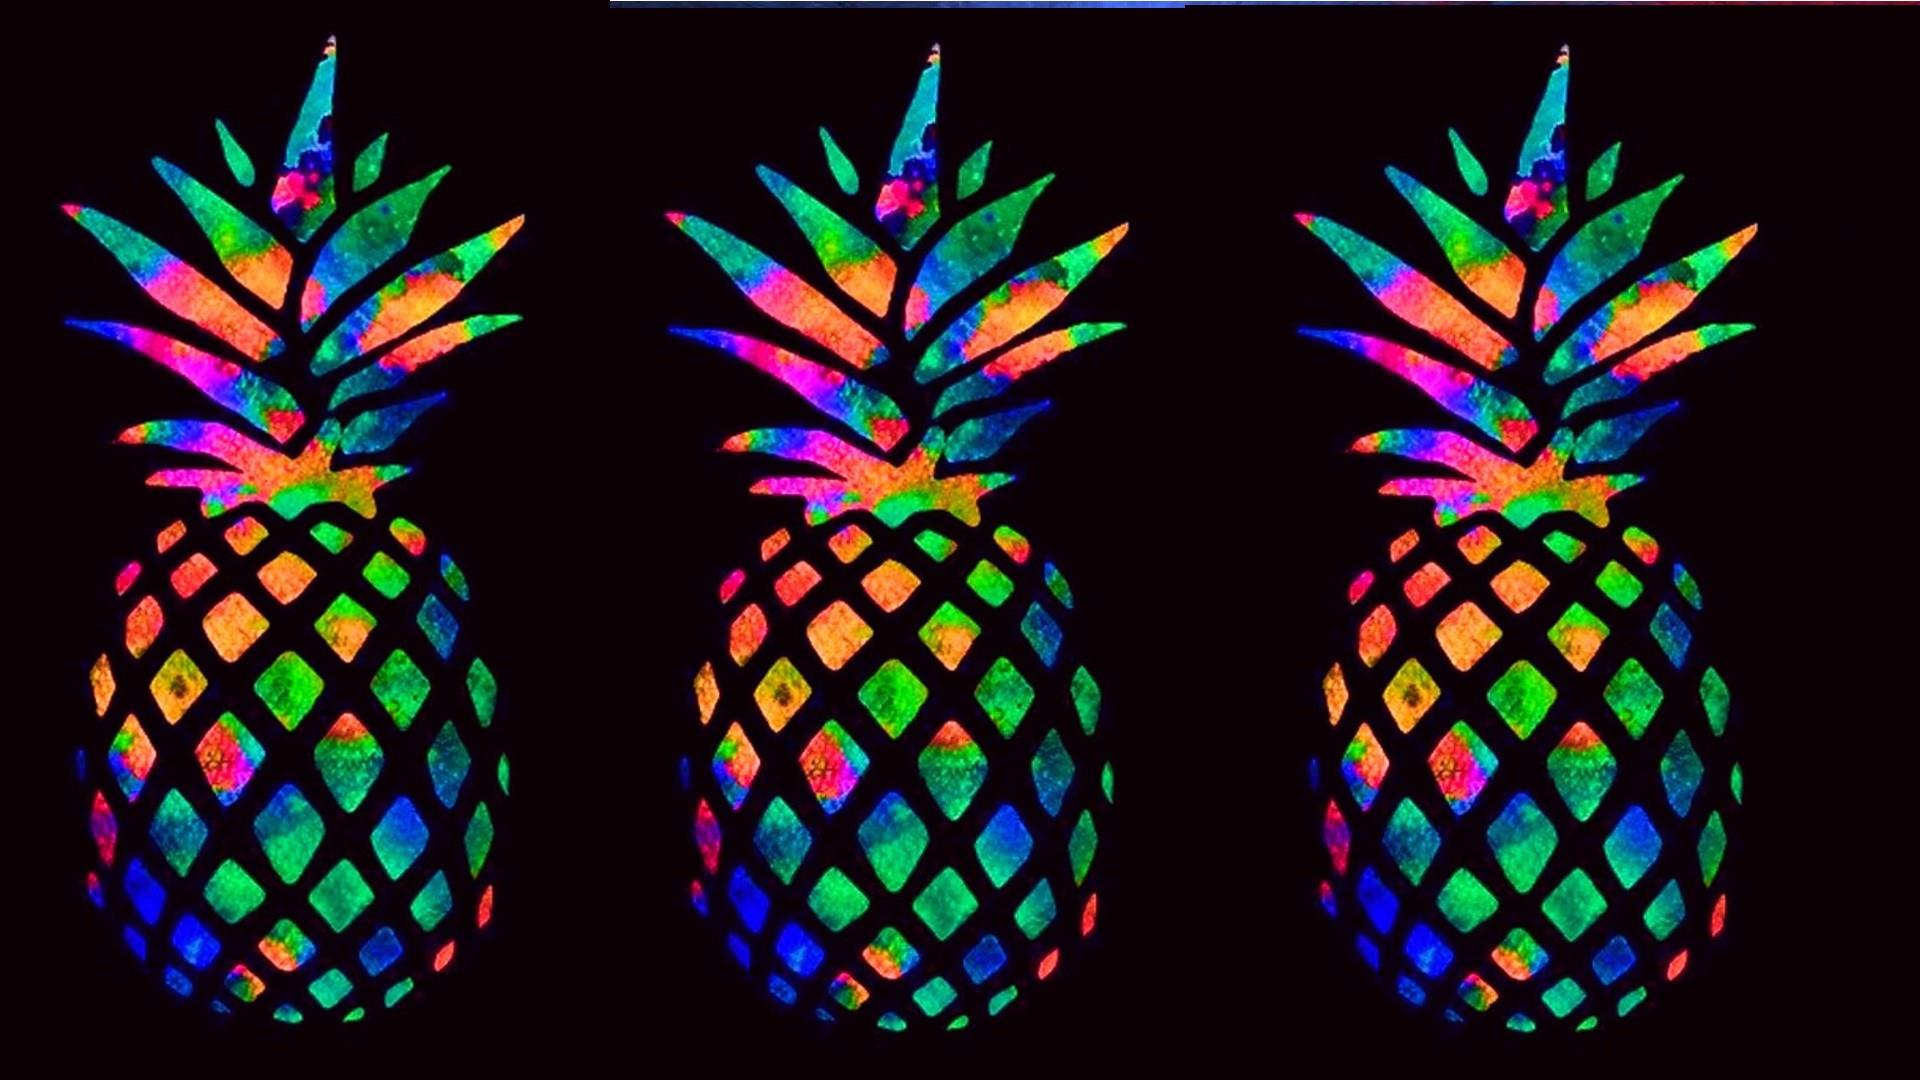 Pineapple Desktop Wallpapers   Top Free Pineapple Desktop